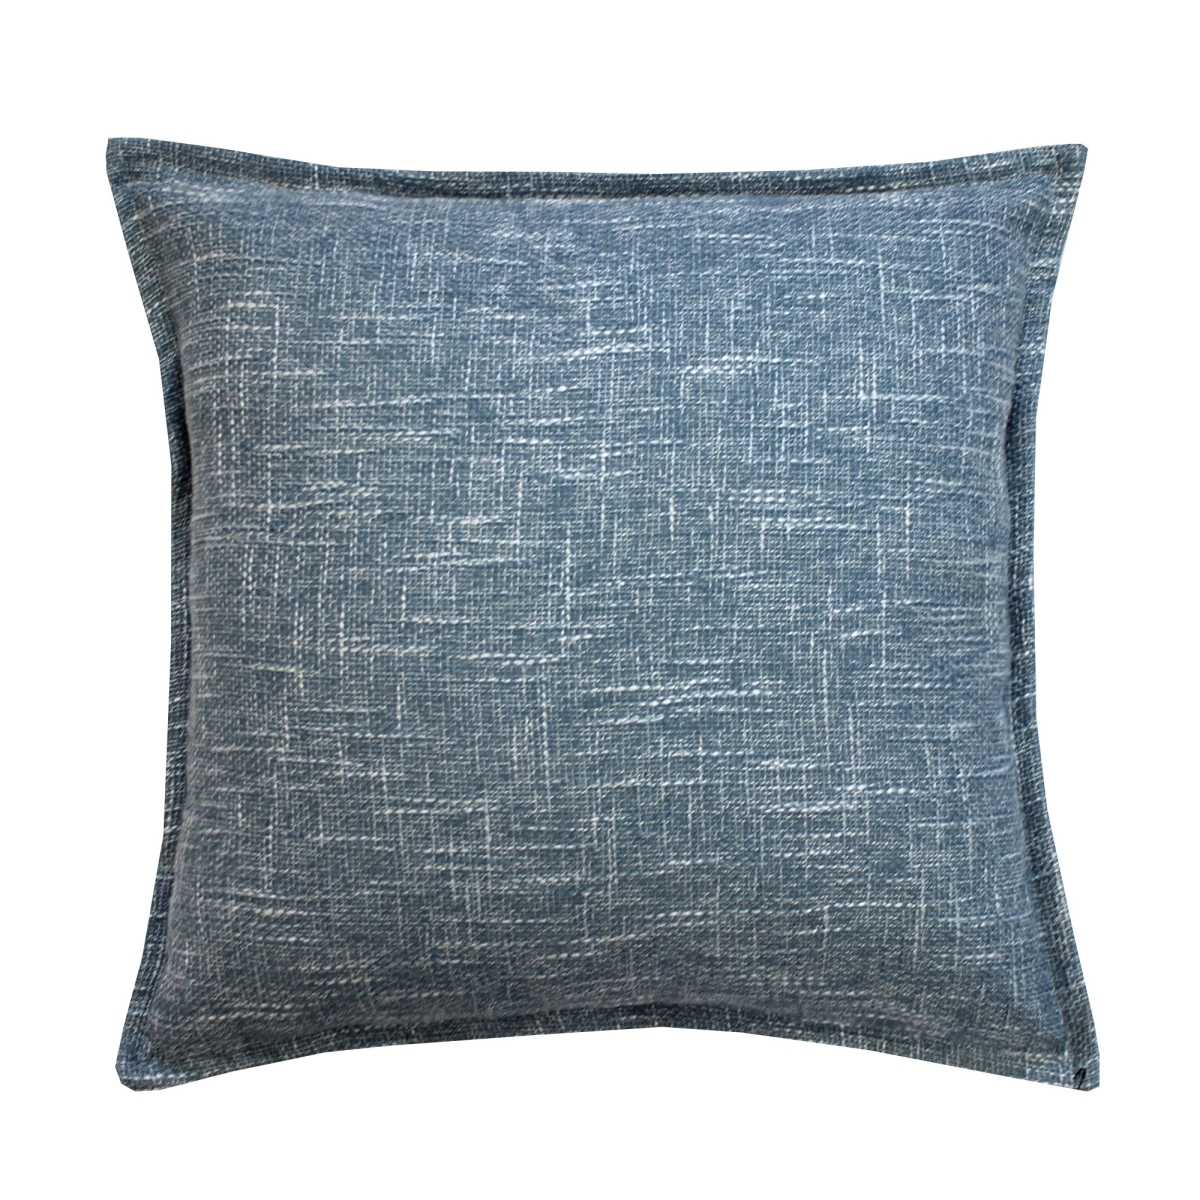 18 X 18 In. Burlap Cushion Cover - Blue